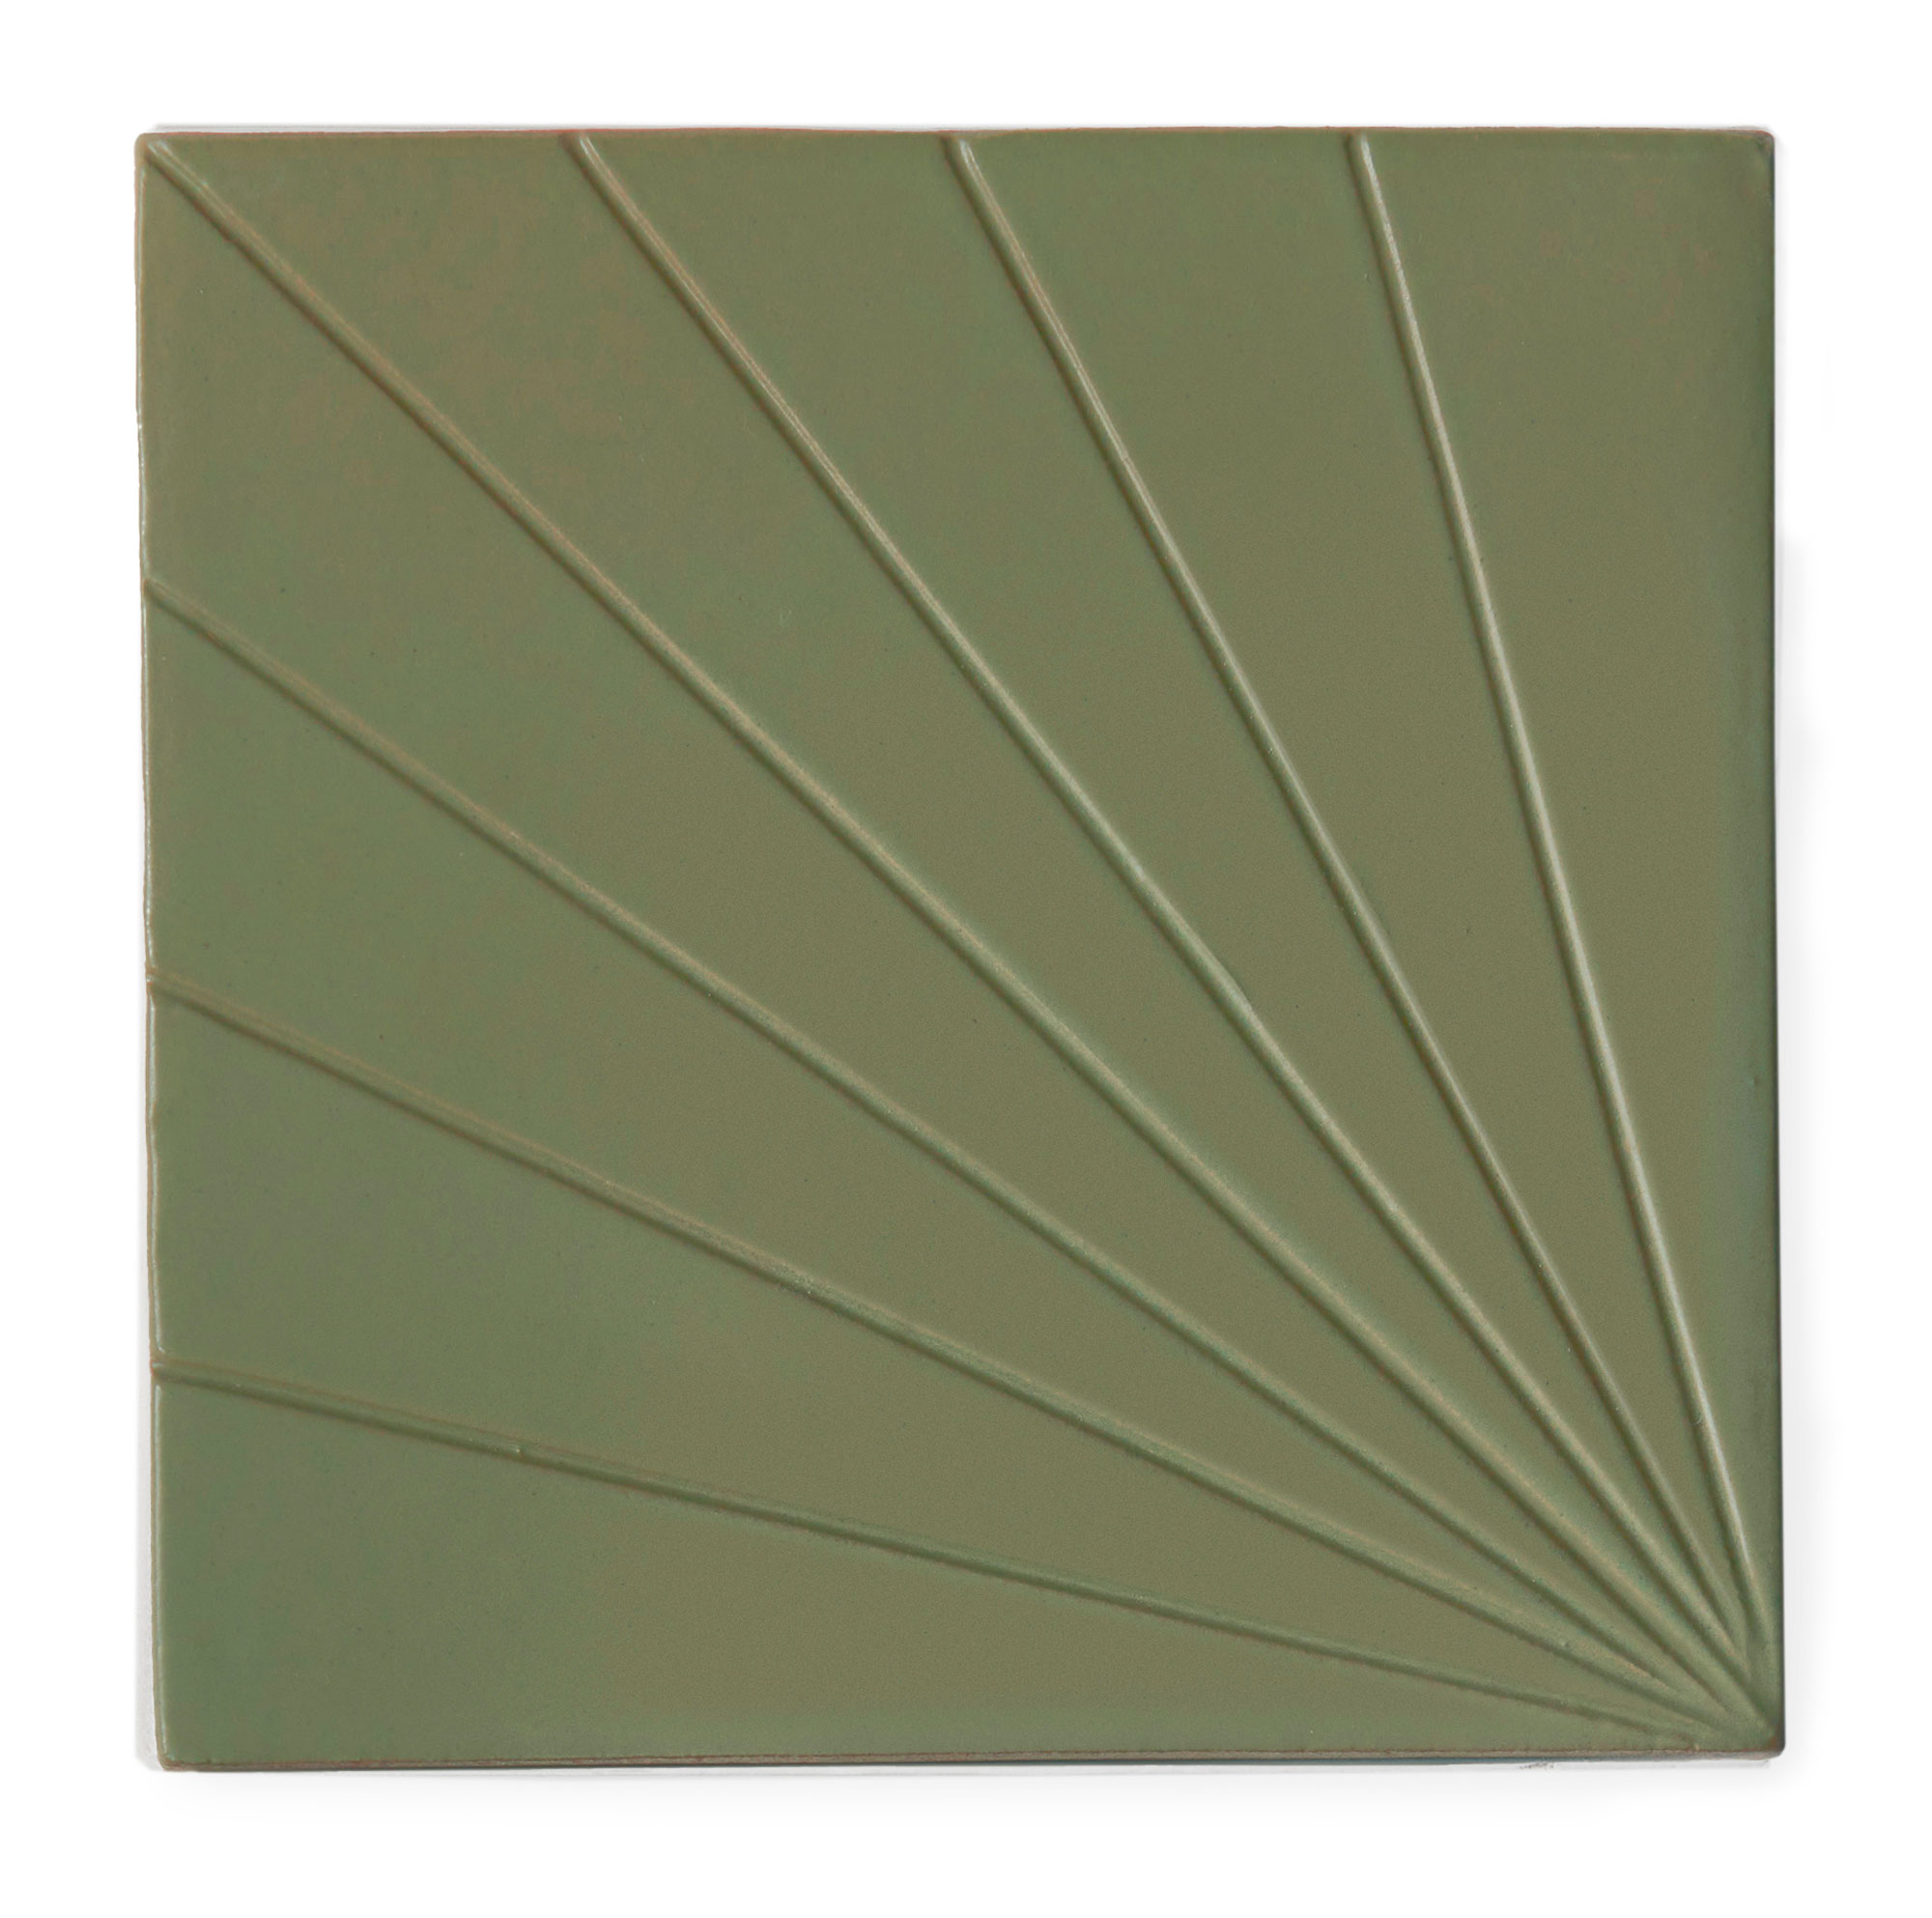 Sample: Tulum Green 6x6 - Dimensional Relief Artisan Ceramic Tile